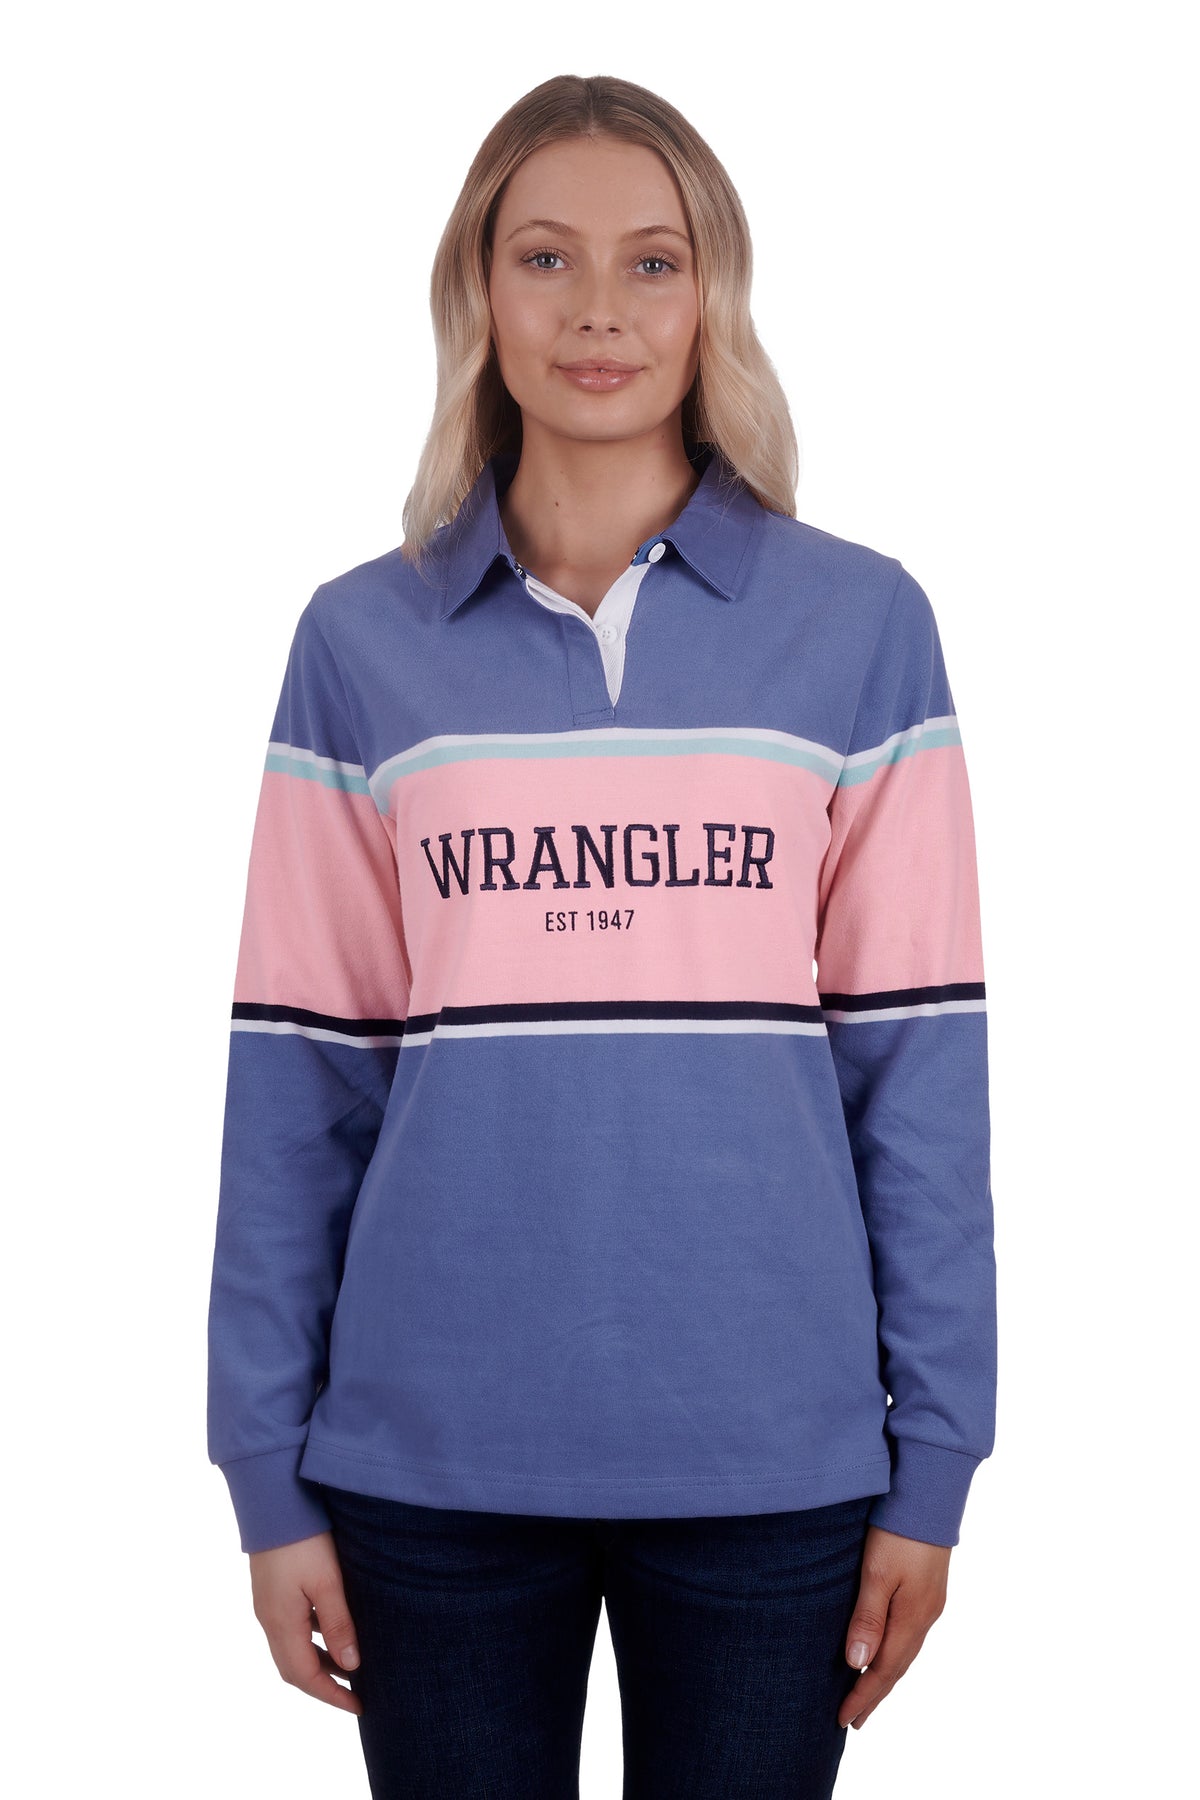 Wrangler Womens Nicki Rugby - Blue/Pink